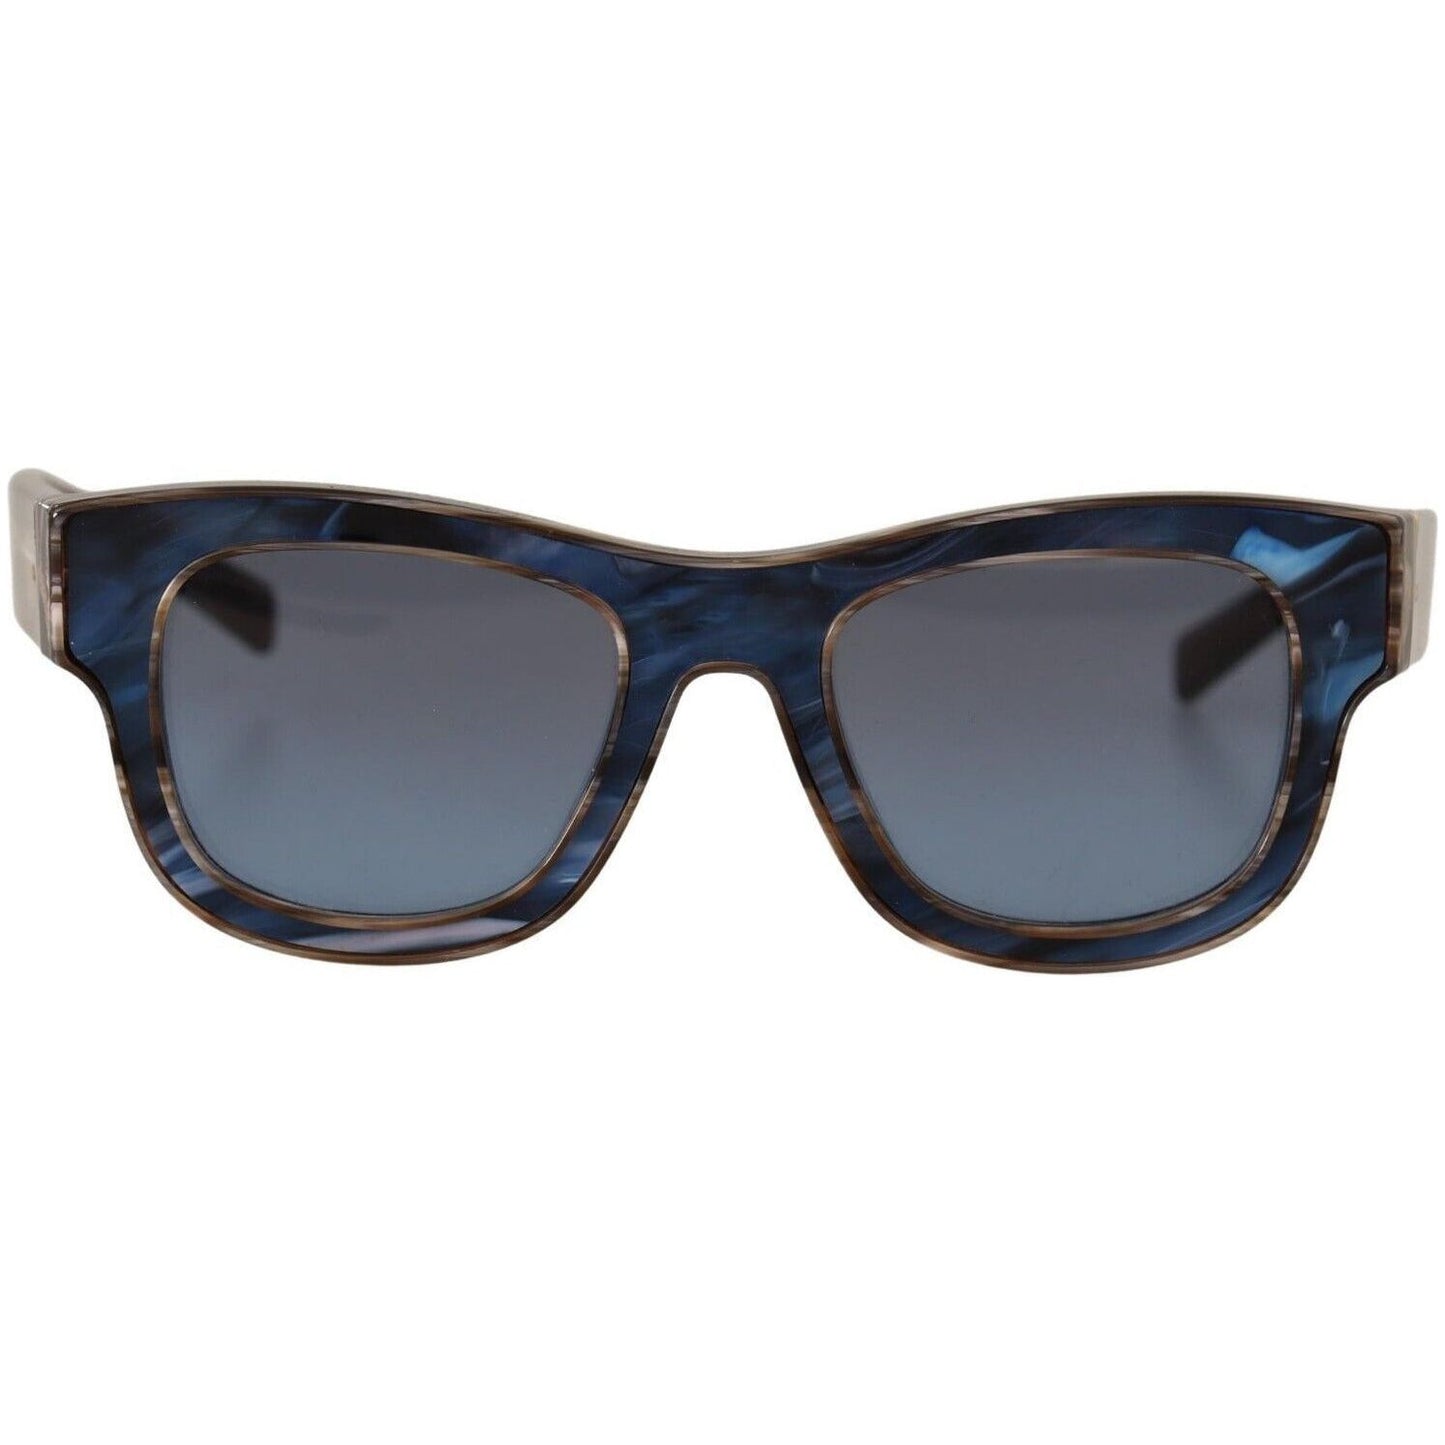 Dolce & Gabbana Elegant Brown & Blue Gradient Sunglasses brown-blue-gradient-lenses-eyewear-sunglasses WOMAN SUNGLASSES s-l1600-95-1-4b1e2623-dc2.jpg